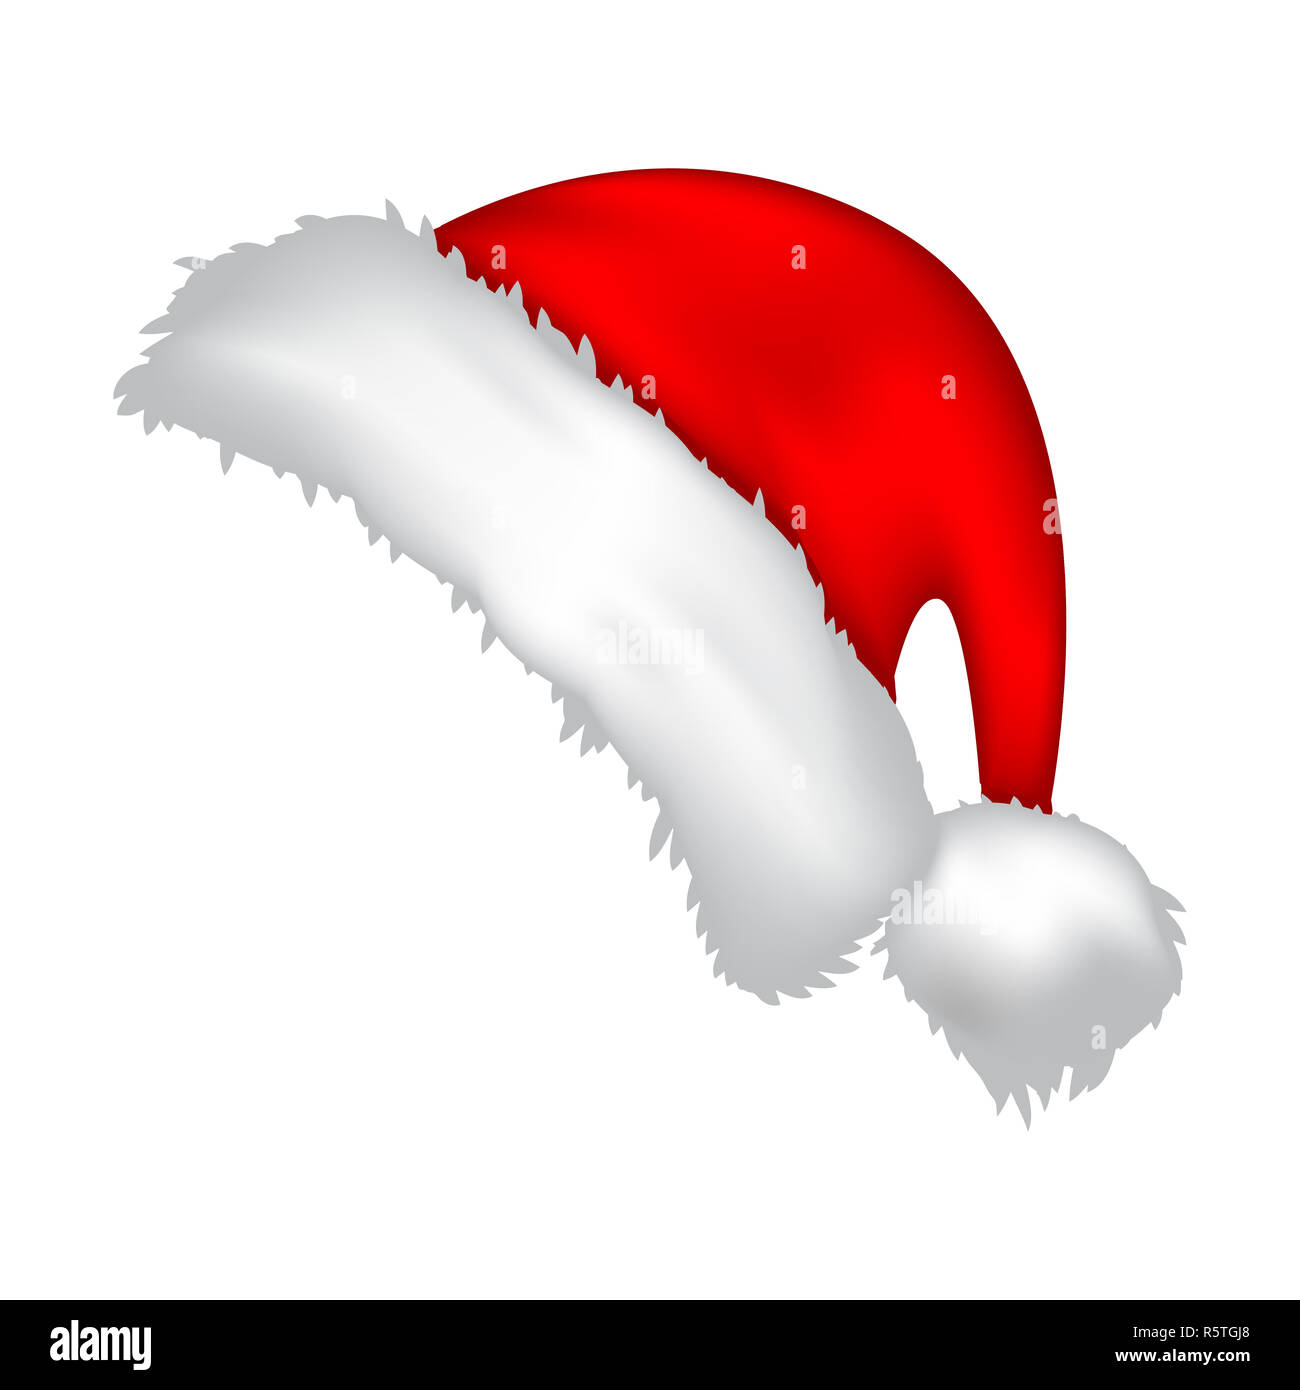 Santa cap, Christmas hat icon, symbol, design. Winter vector illustration isolated on white background. Stock Photo